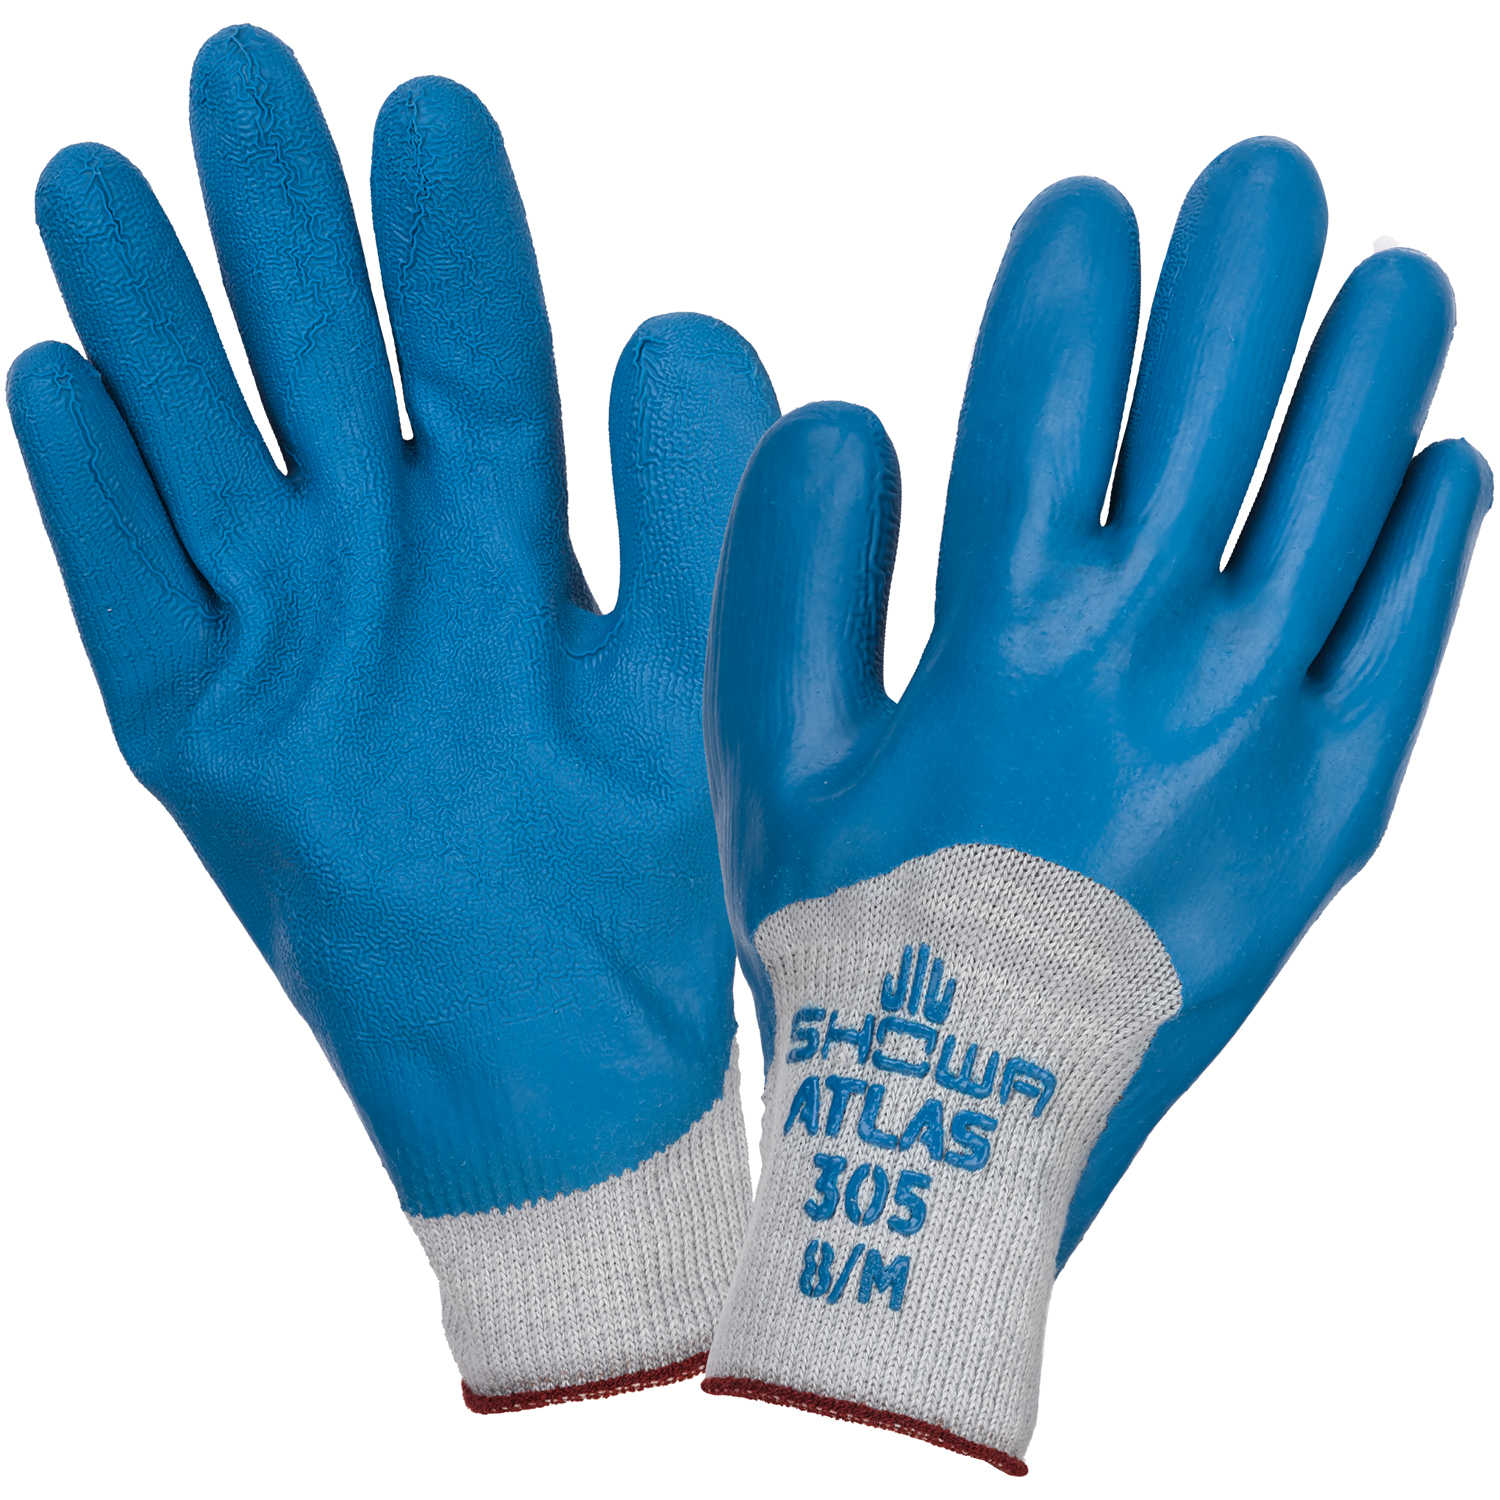 Showa Atlas Rubber Coated Glove 